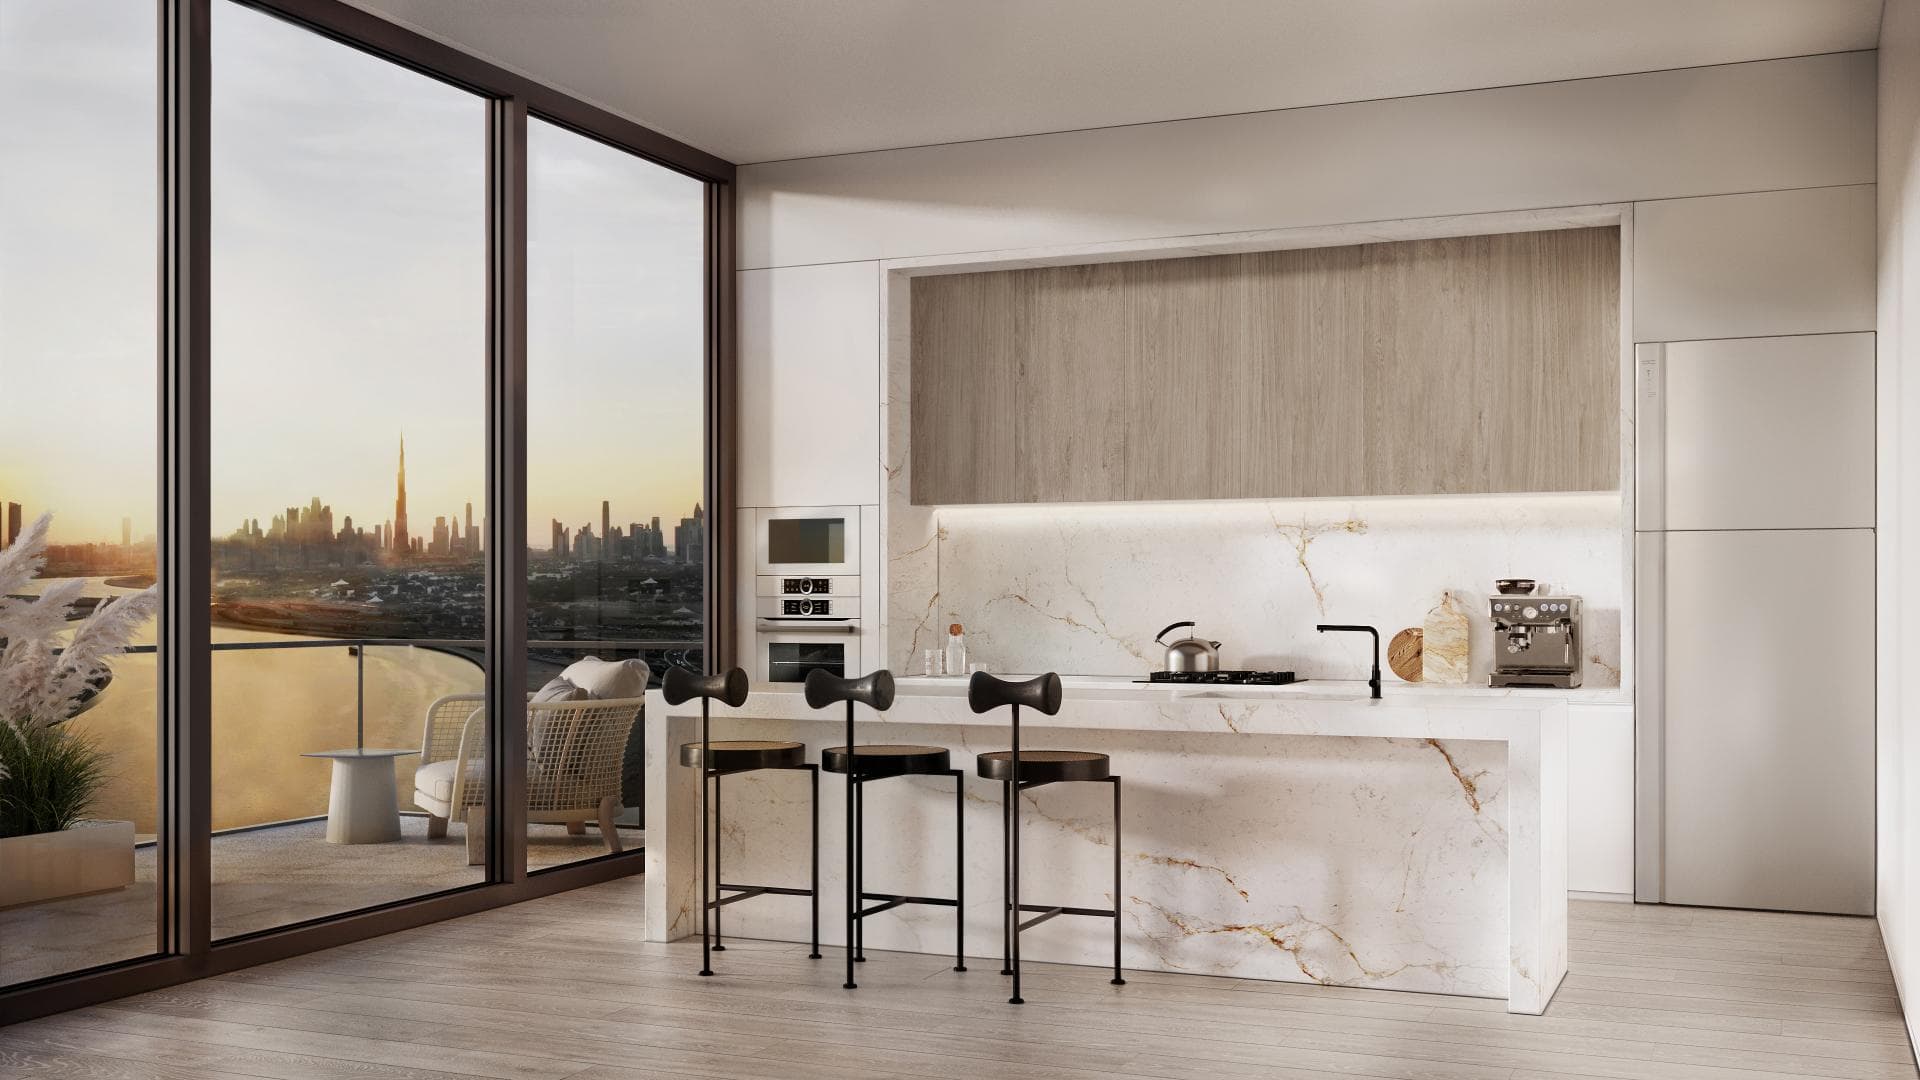 2 Bedroom Apartment For Sale Kempinski Residences The Creek Dubai Lp15628 120162dc9c43bd00.jpg